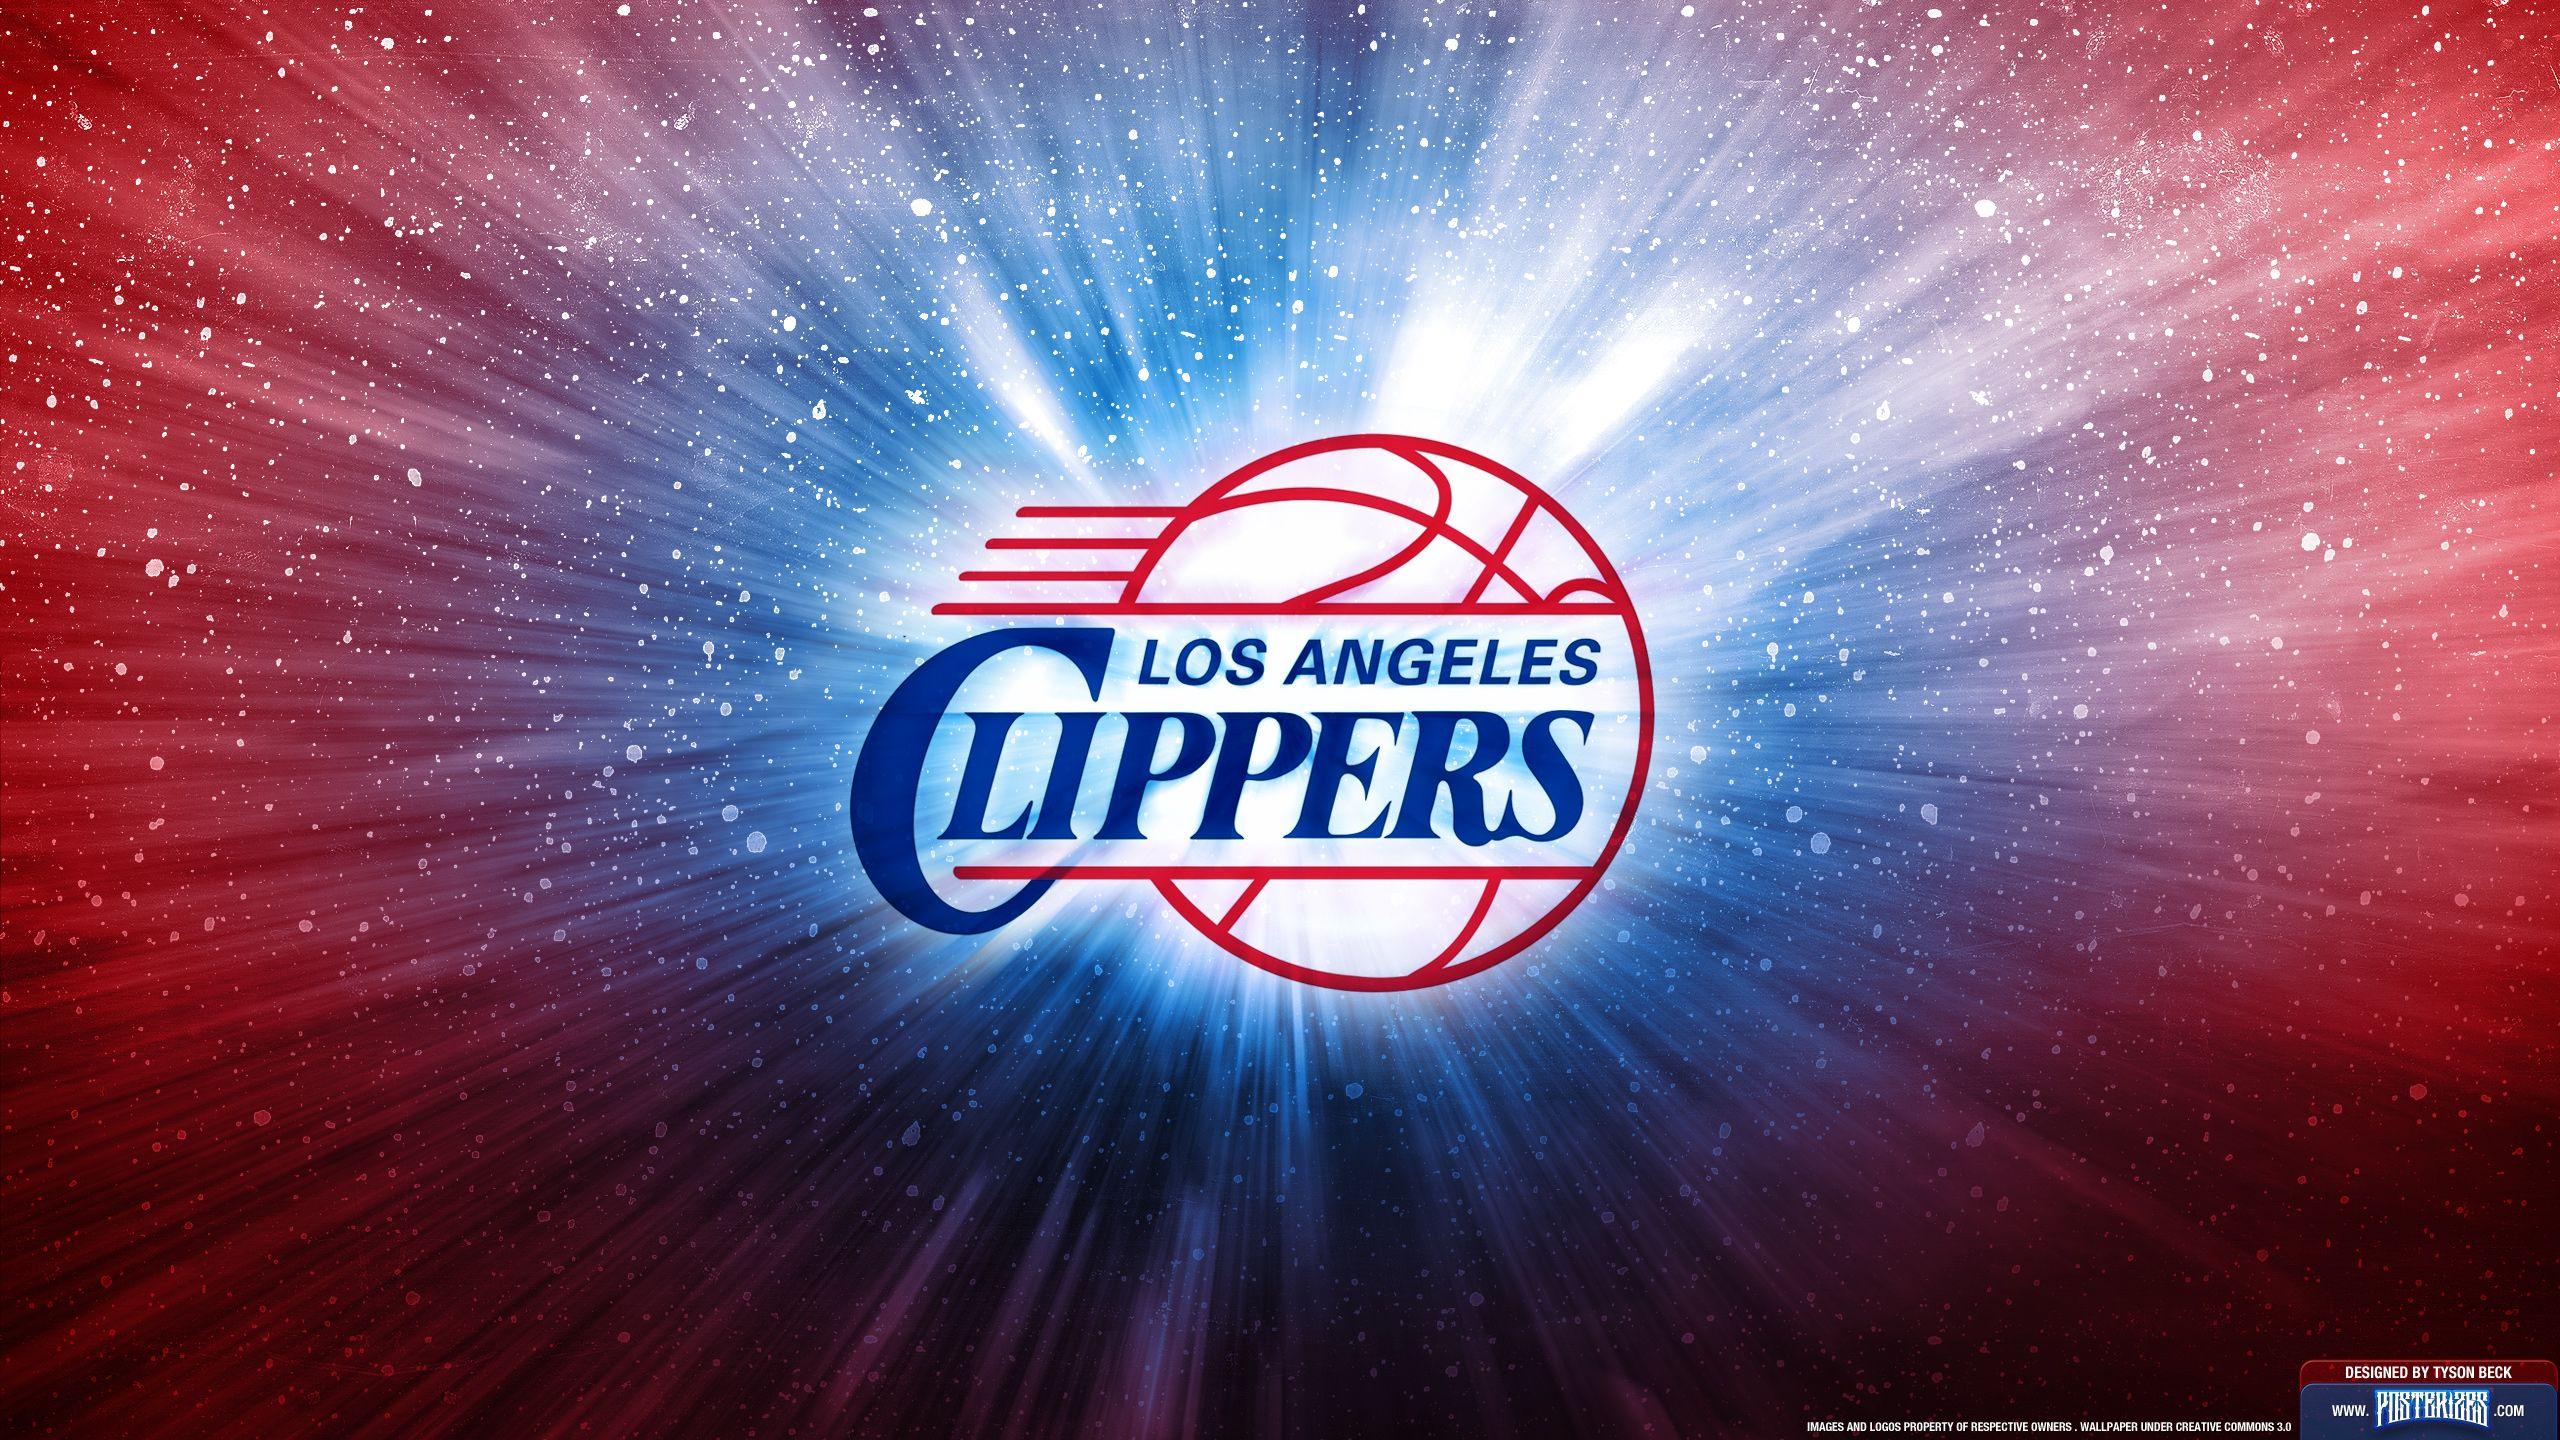 Amazing Wallpaper. Clippers HD Widescreen Wallpaper